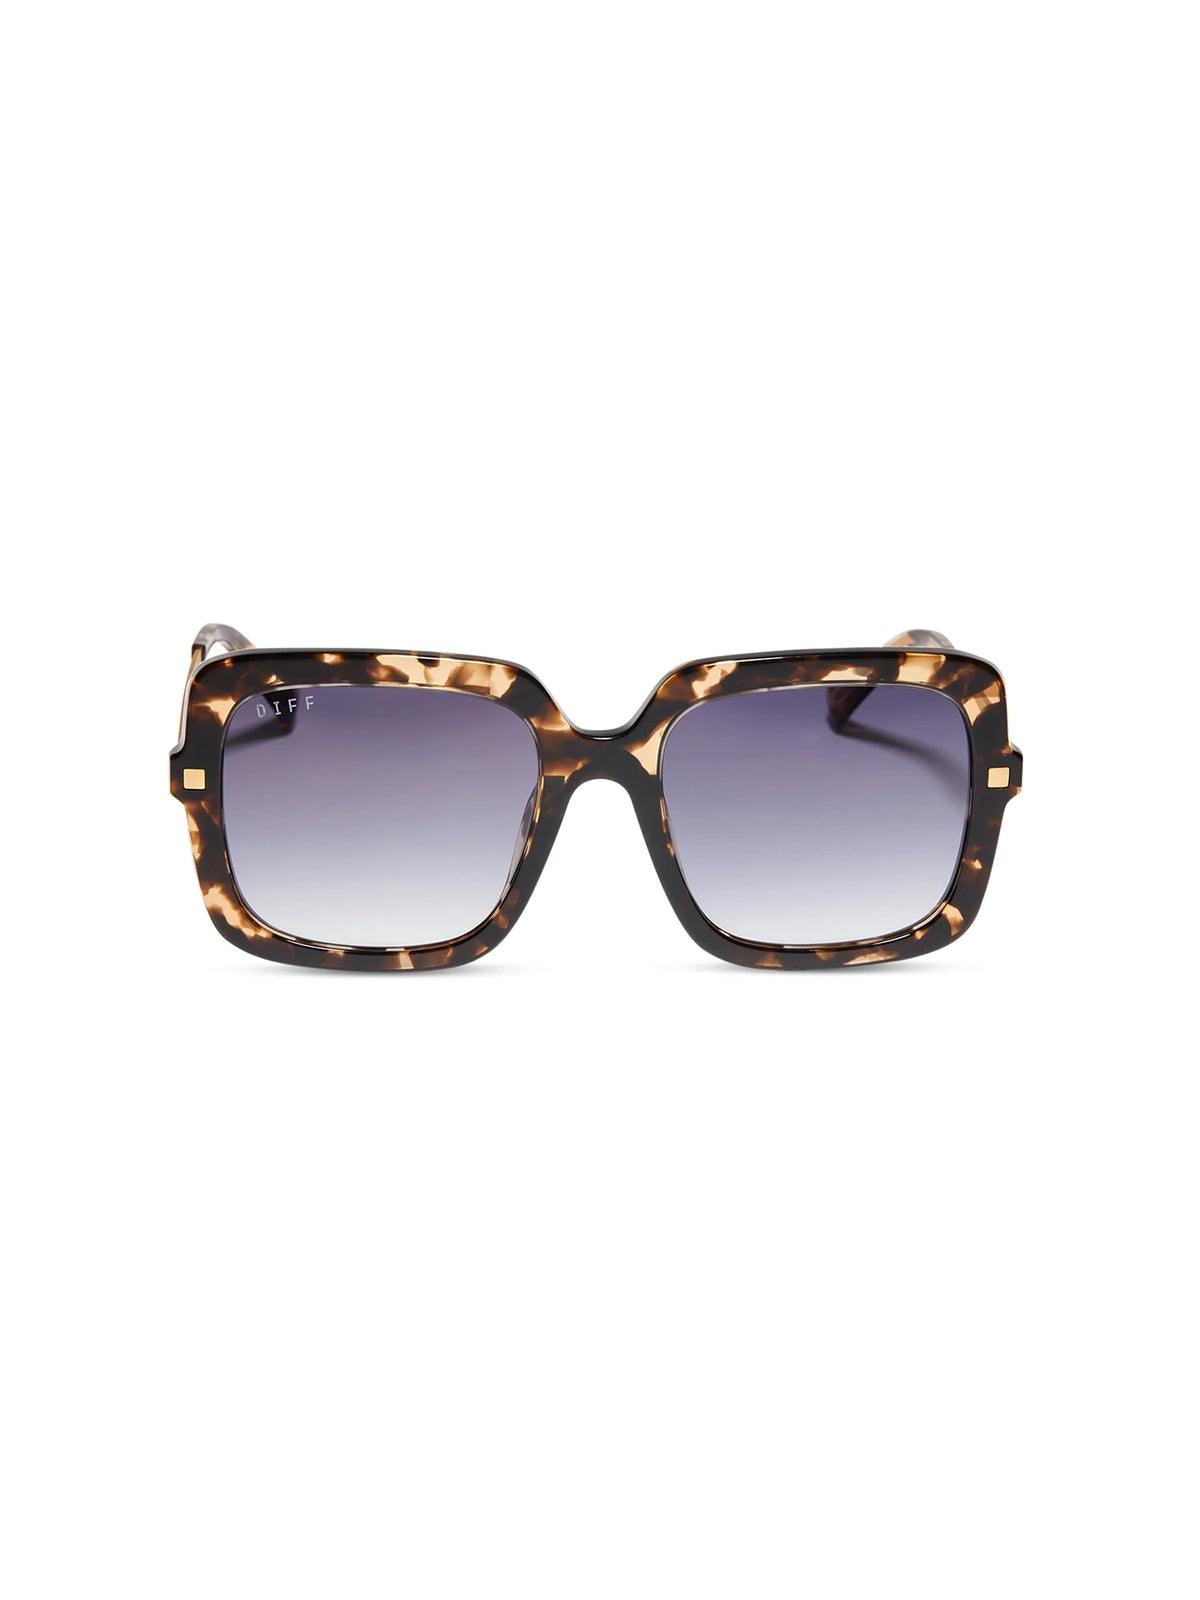 diff eyewear sandra sunglasses in espresso tortoise grey gradient